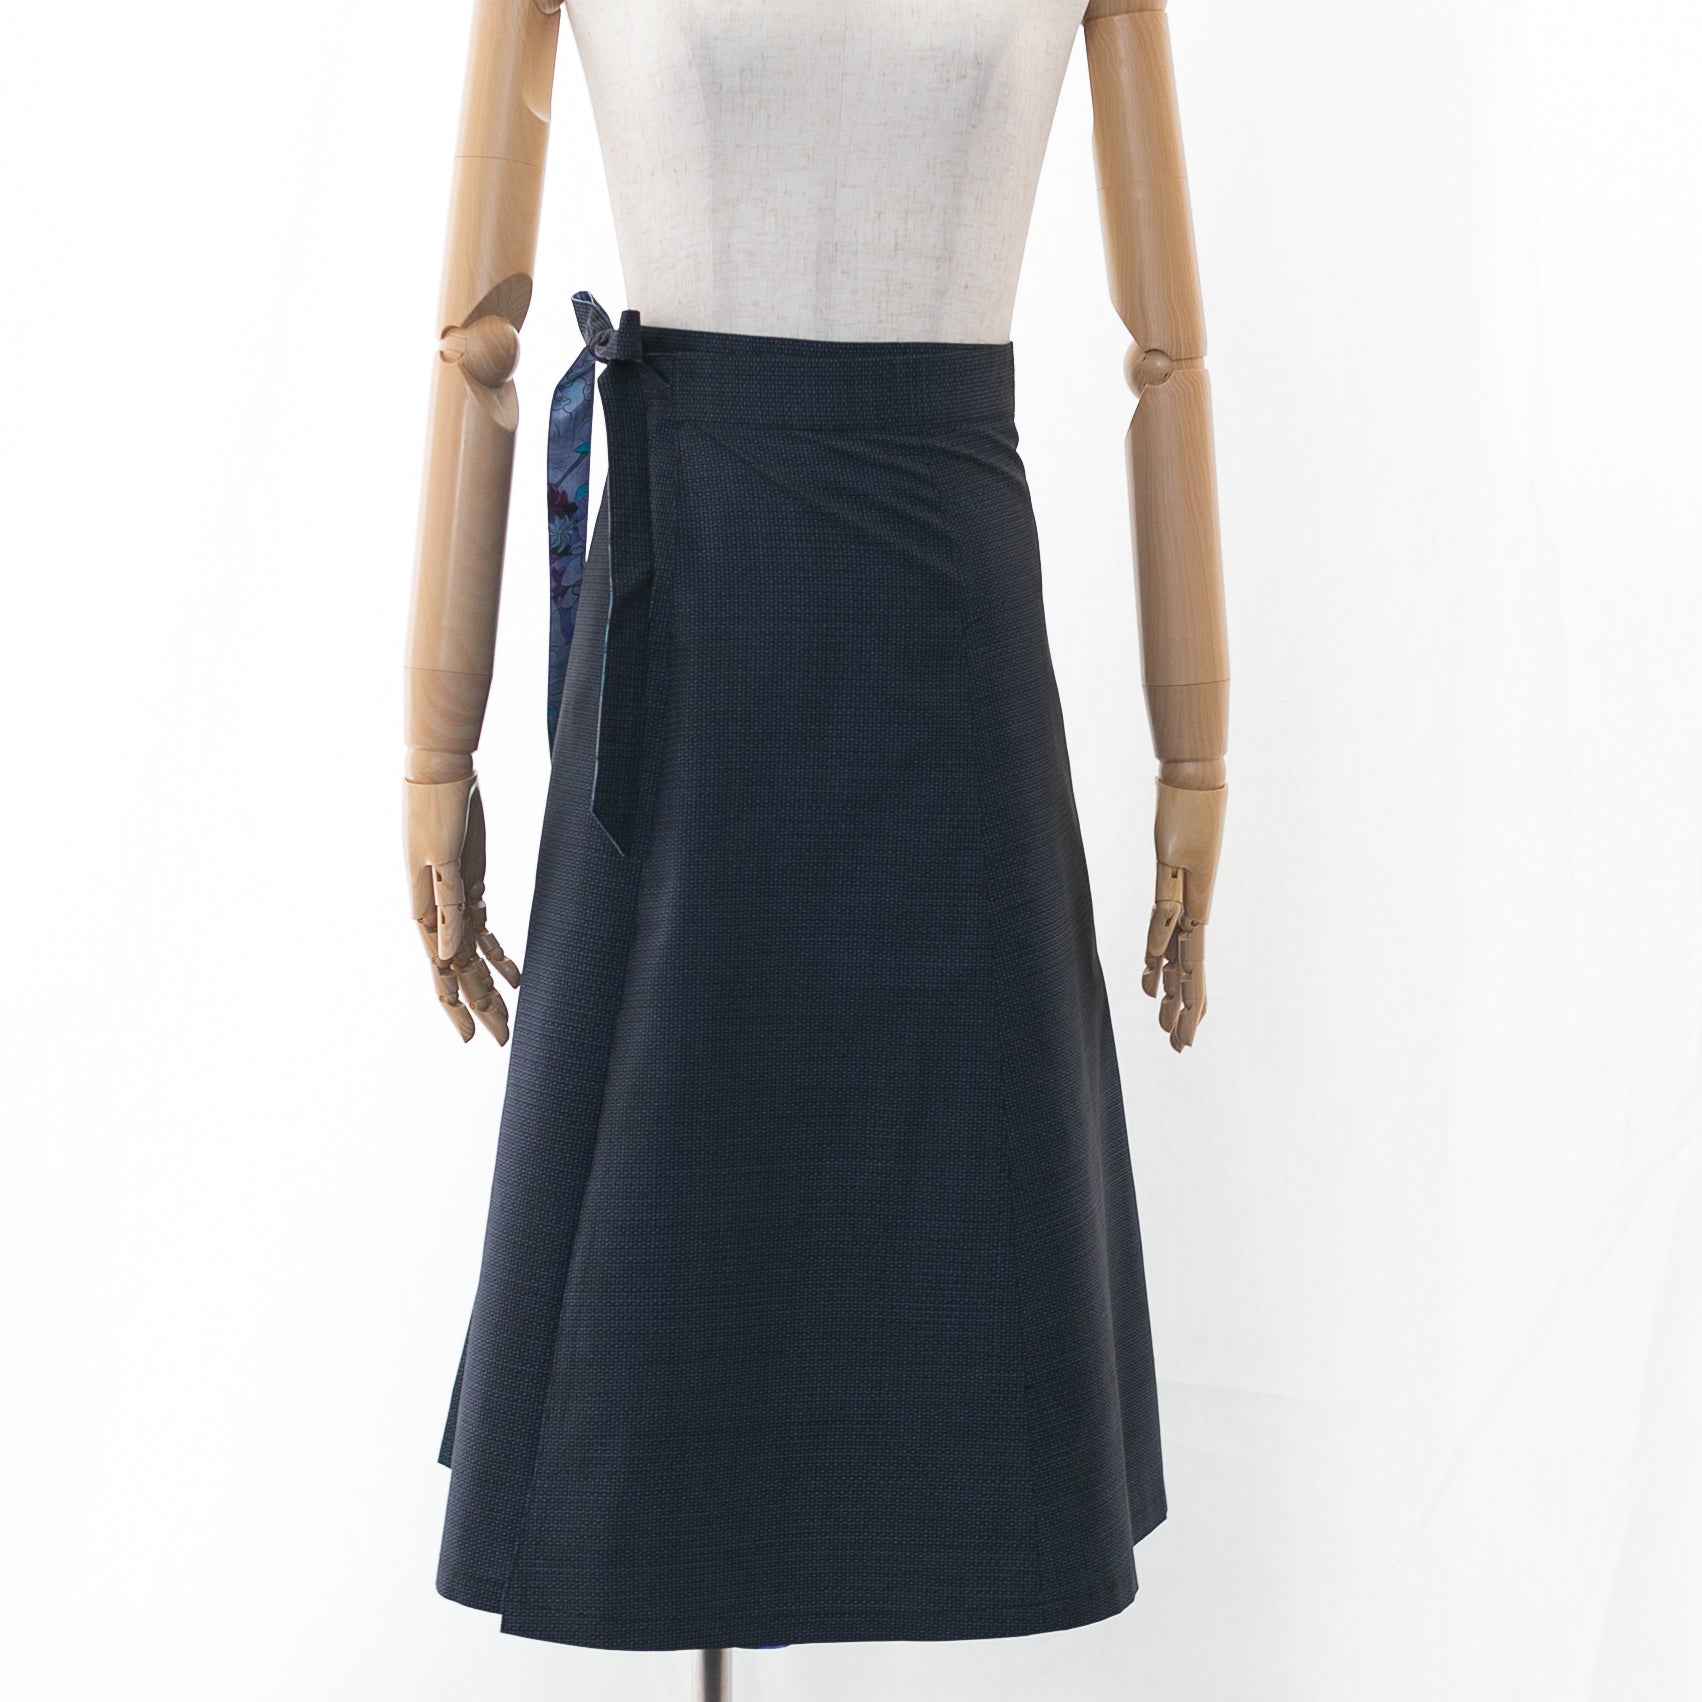 Reversible Skirt Flare - Fiori Viola - Oshima